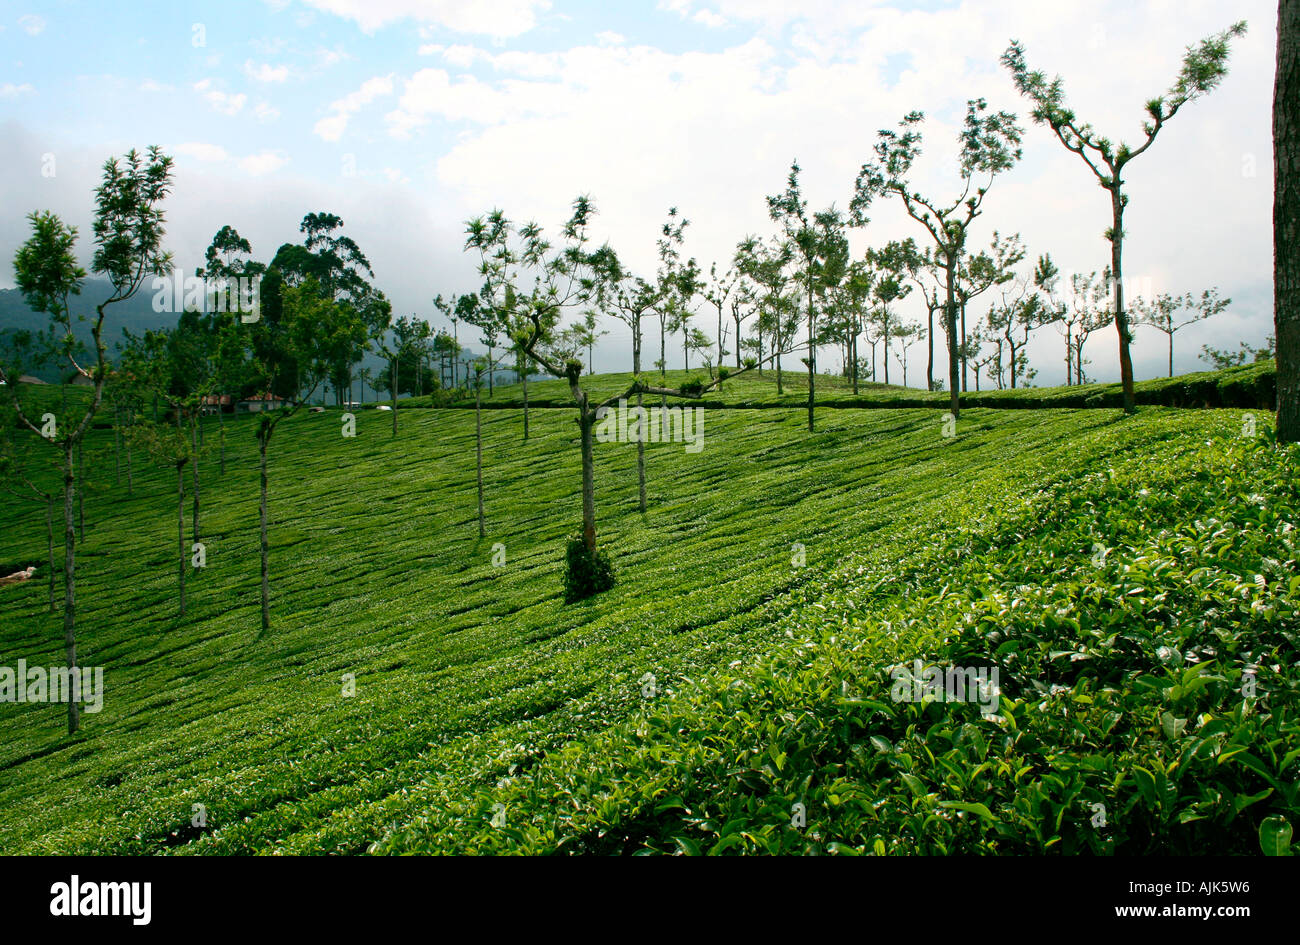 Several rows of trees amidst a tea plantation in Munnar, Kerala, India Stock Photo